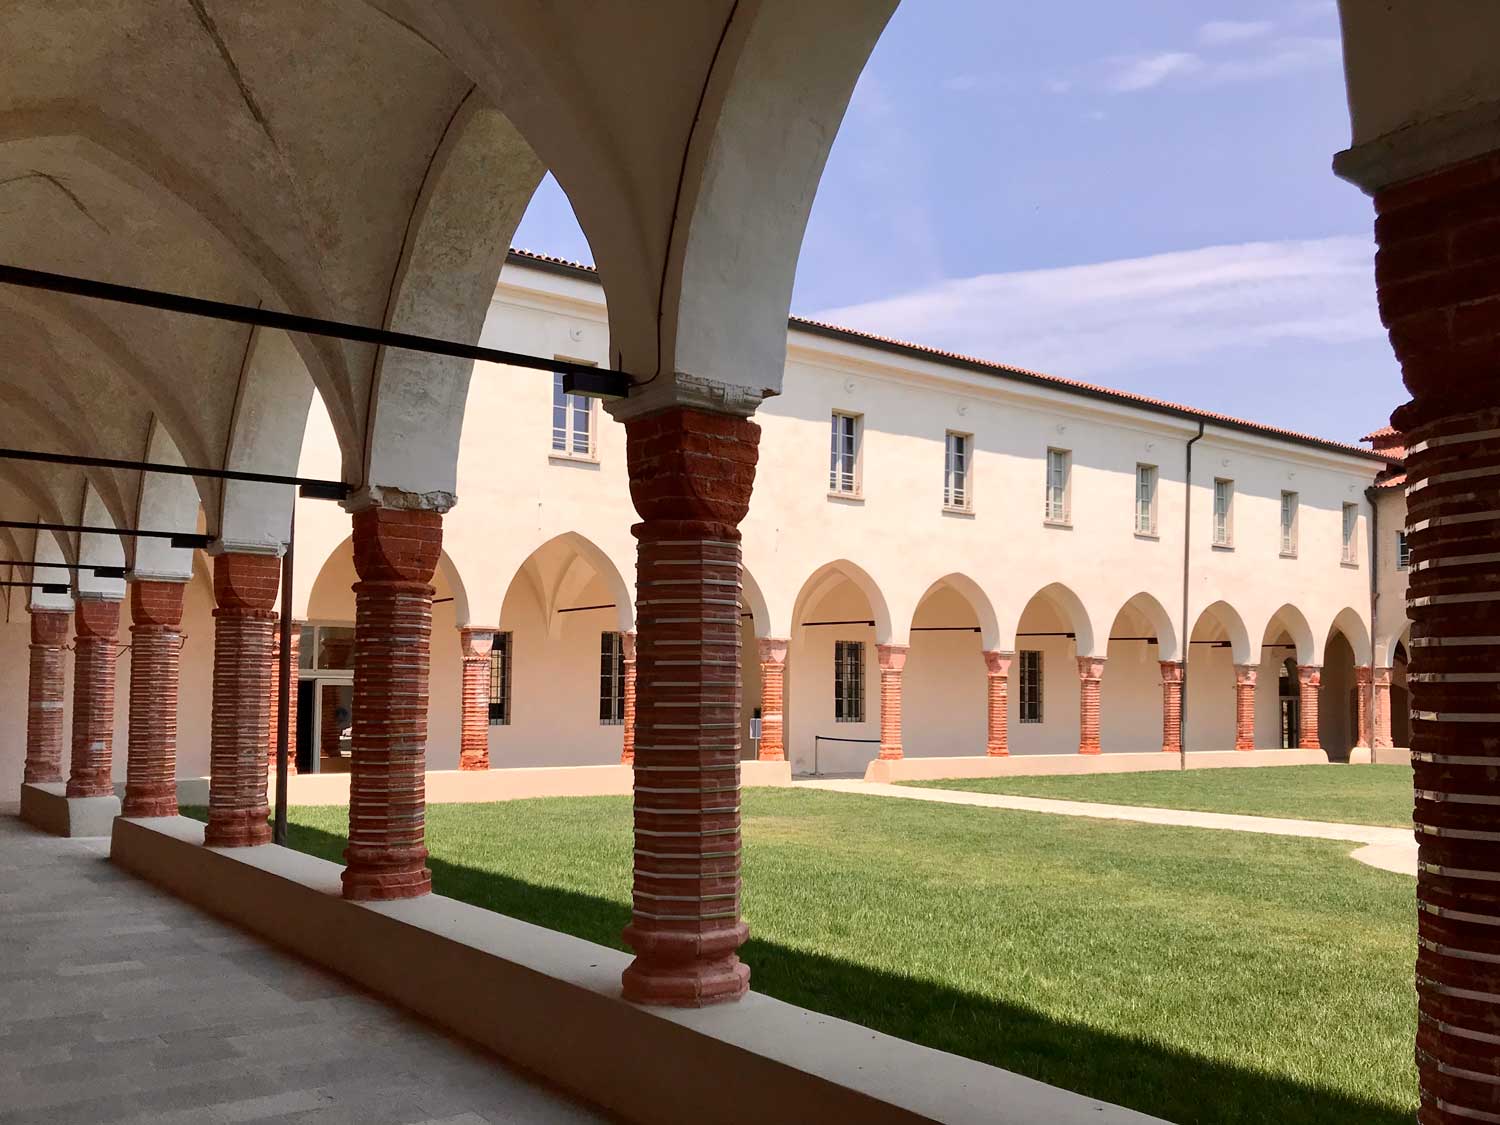 The new campus of the Catholic University in Cremona